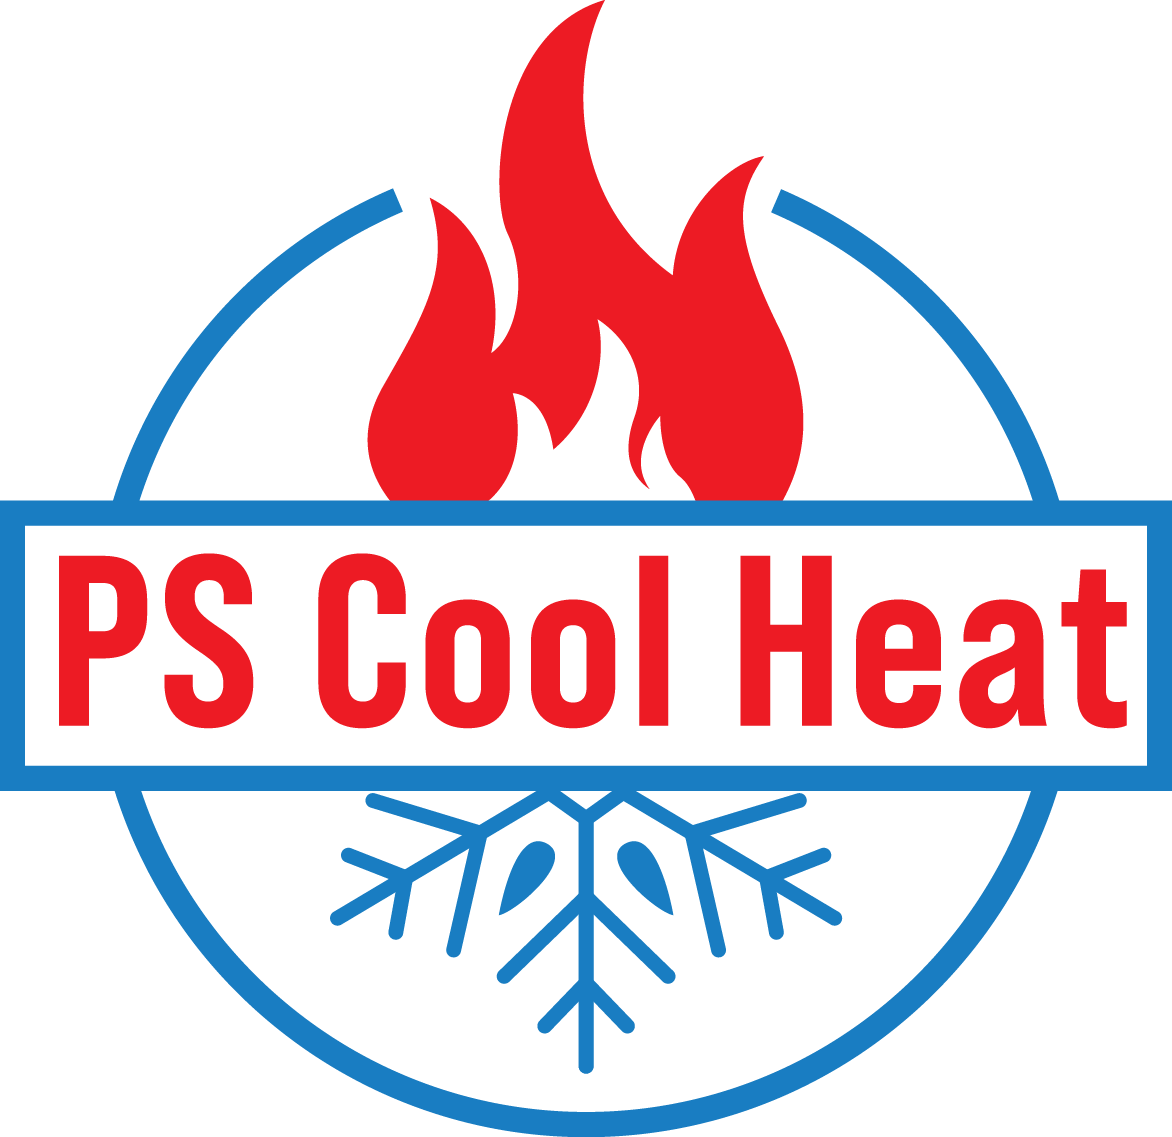 PS Cool Heat